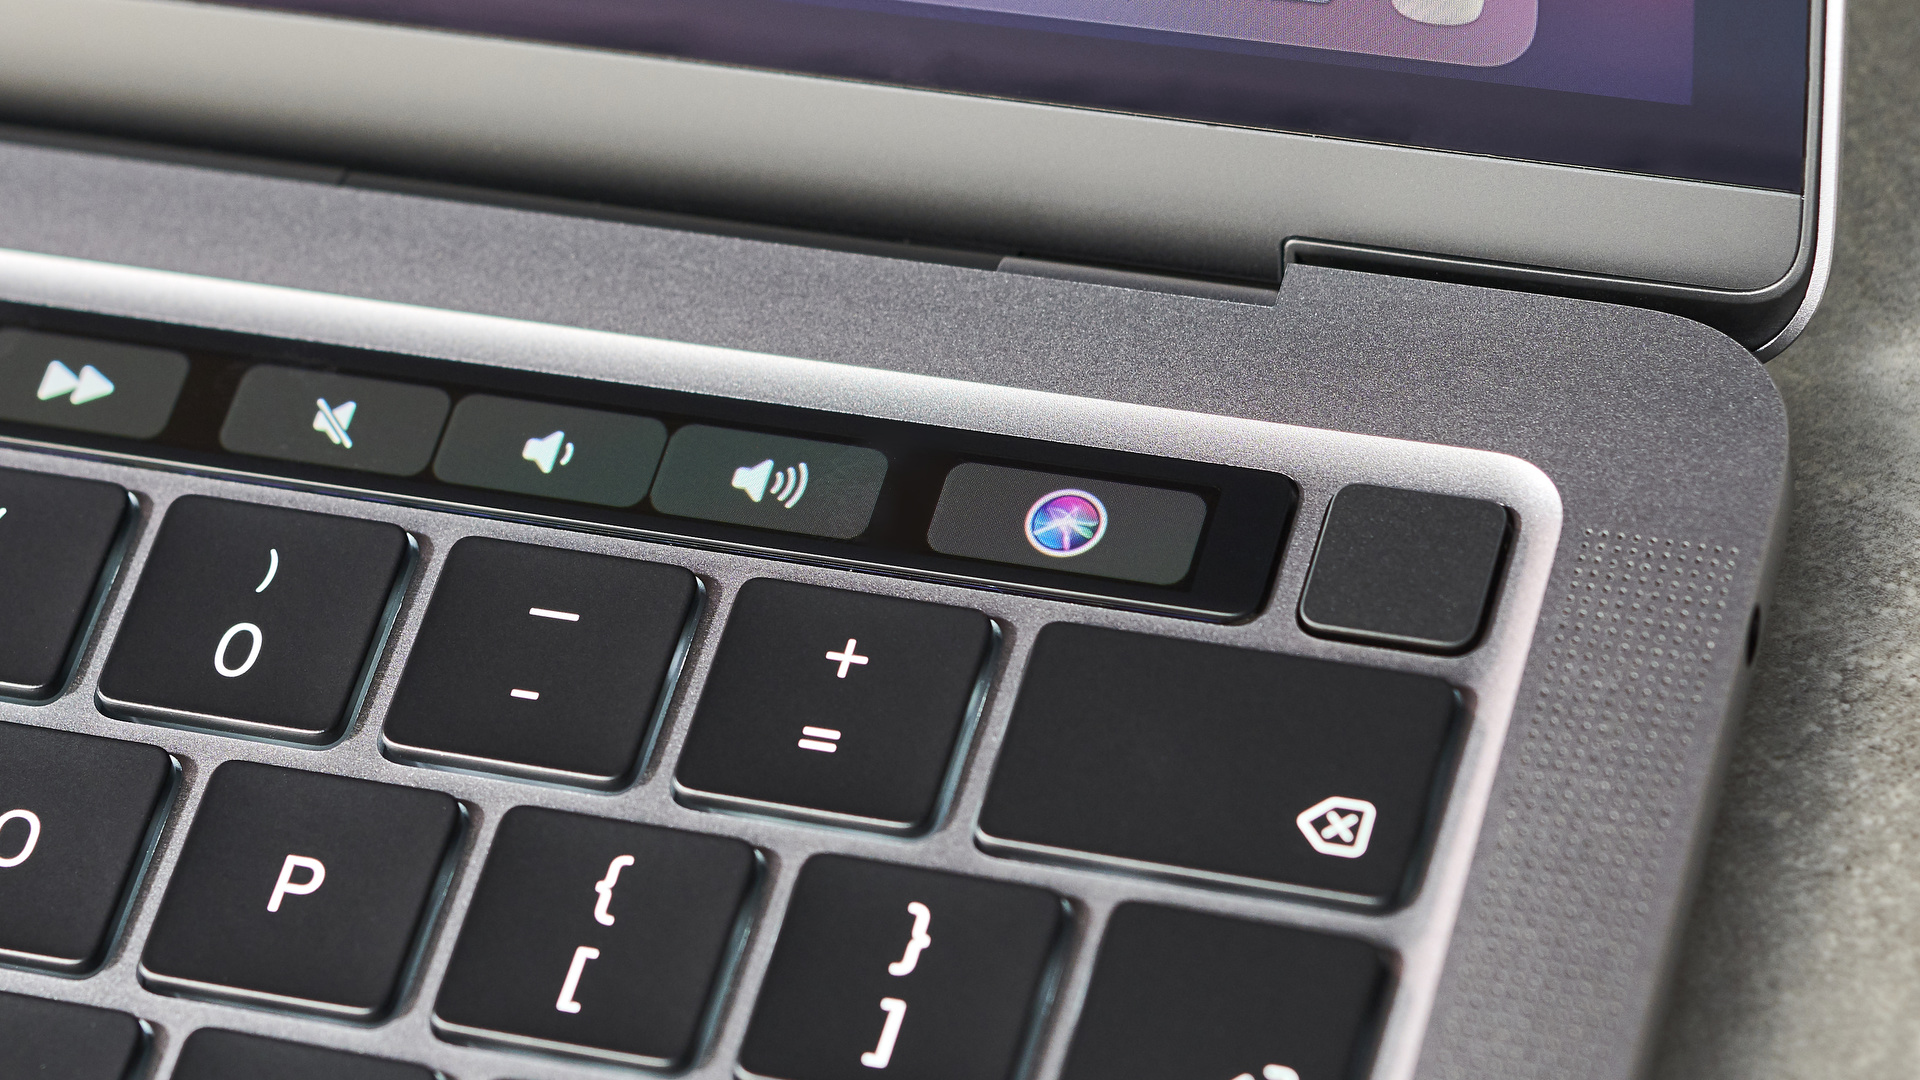 Apple MacBook Pro 13-inch (M1, 2020) on a desk showcasing its keyboard and power button/fingerprint reader